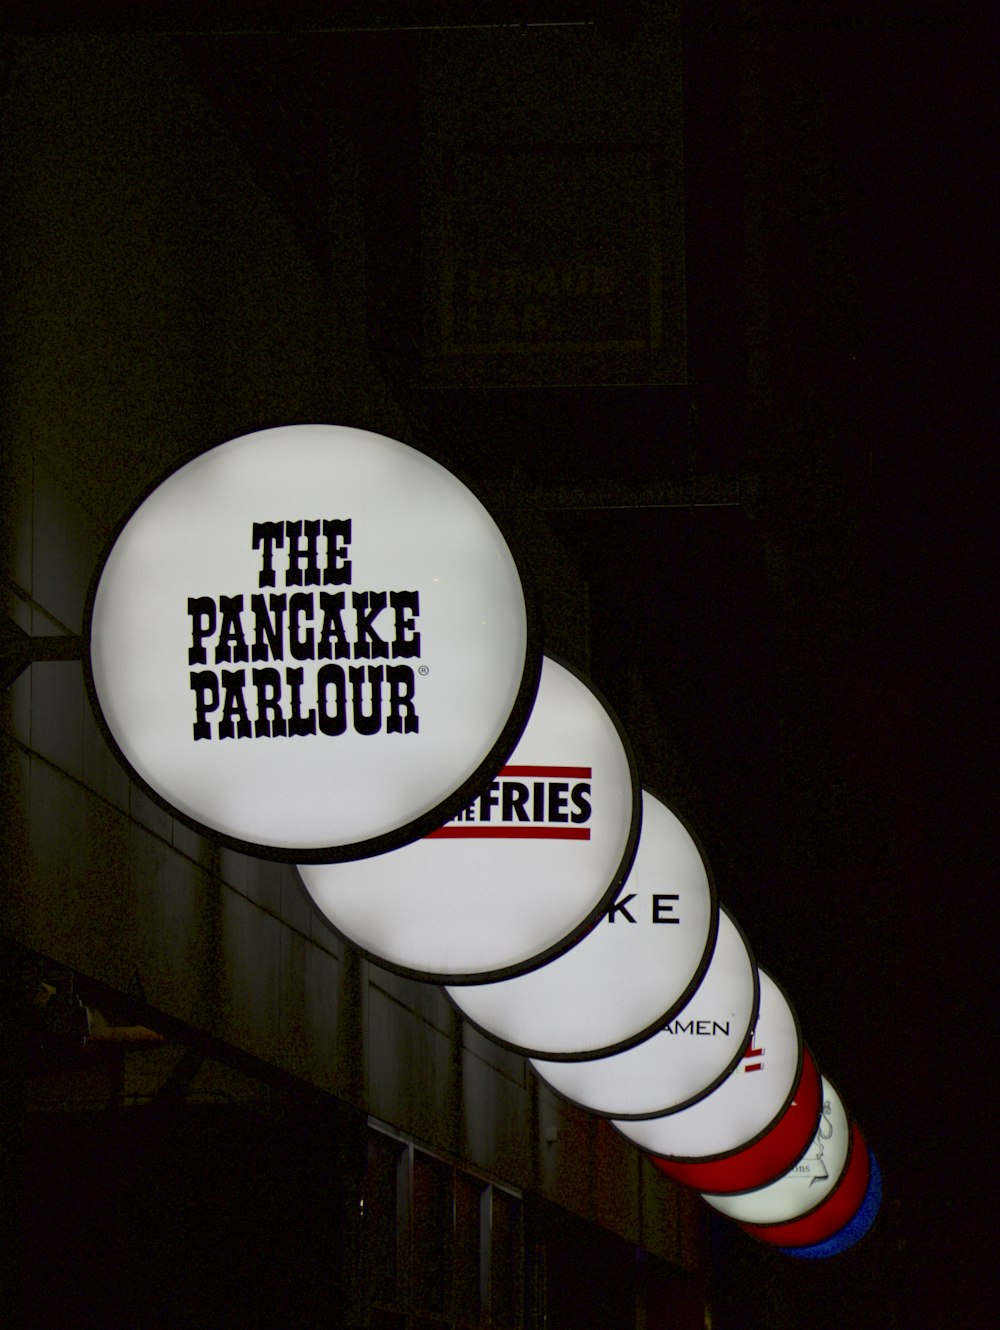 The Pancake Parlour signage